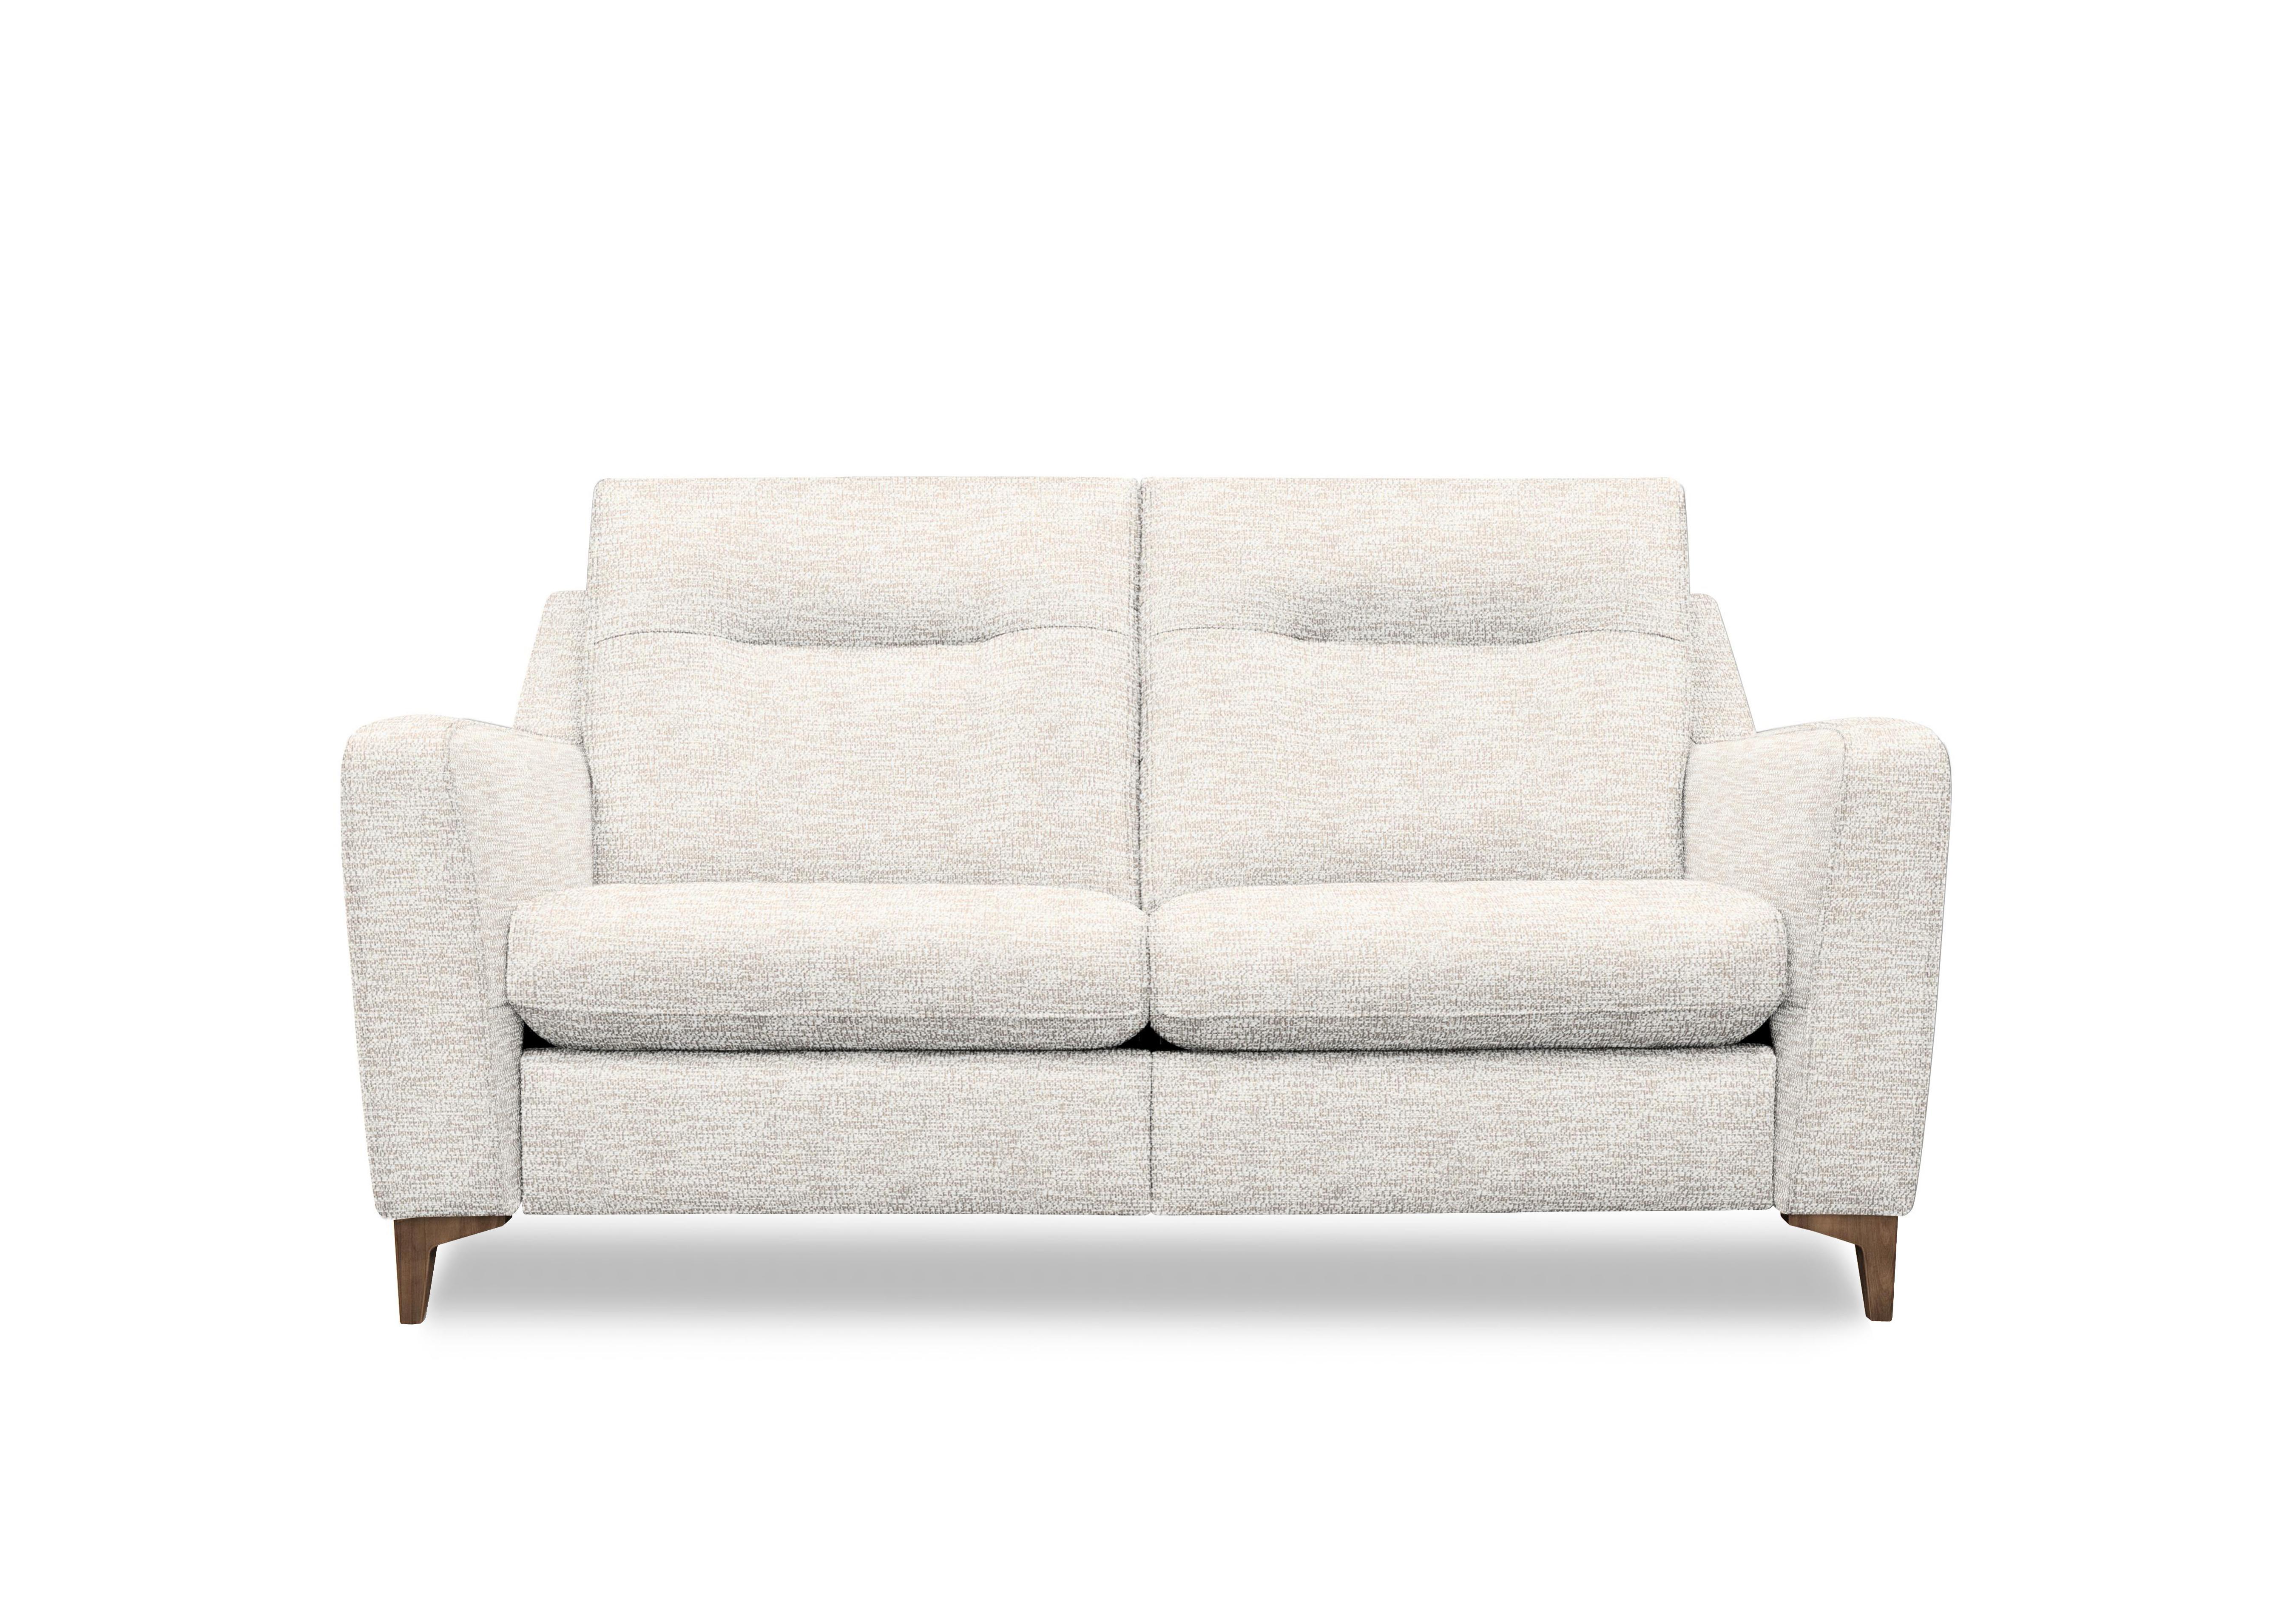 Arlo 2 Seater Fabric Sofa in C931 Rush Cream Wal Ft on Furniture Village